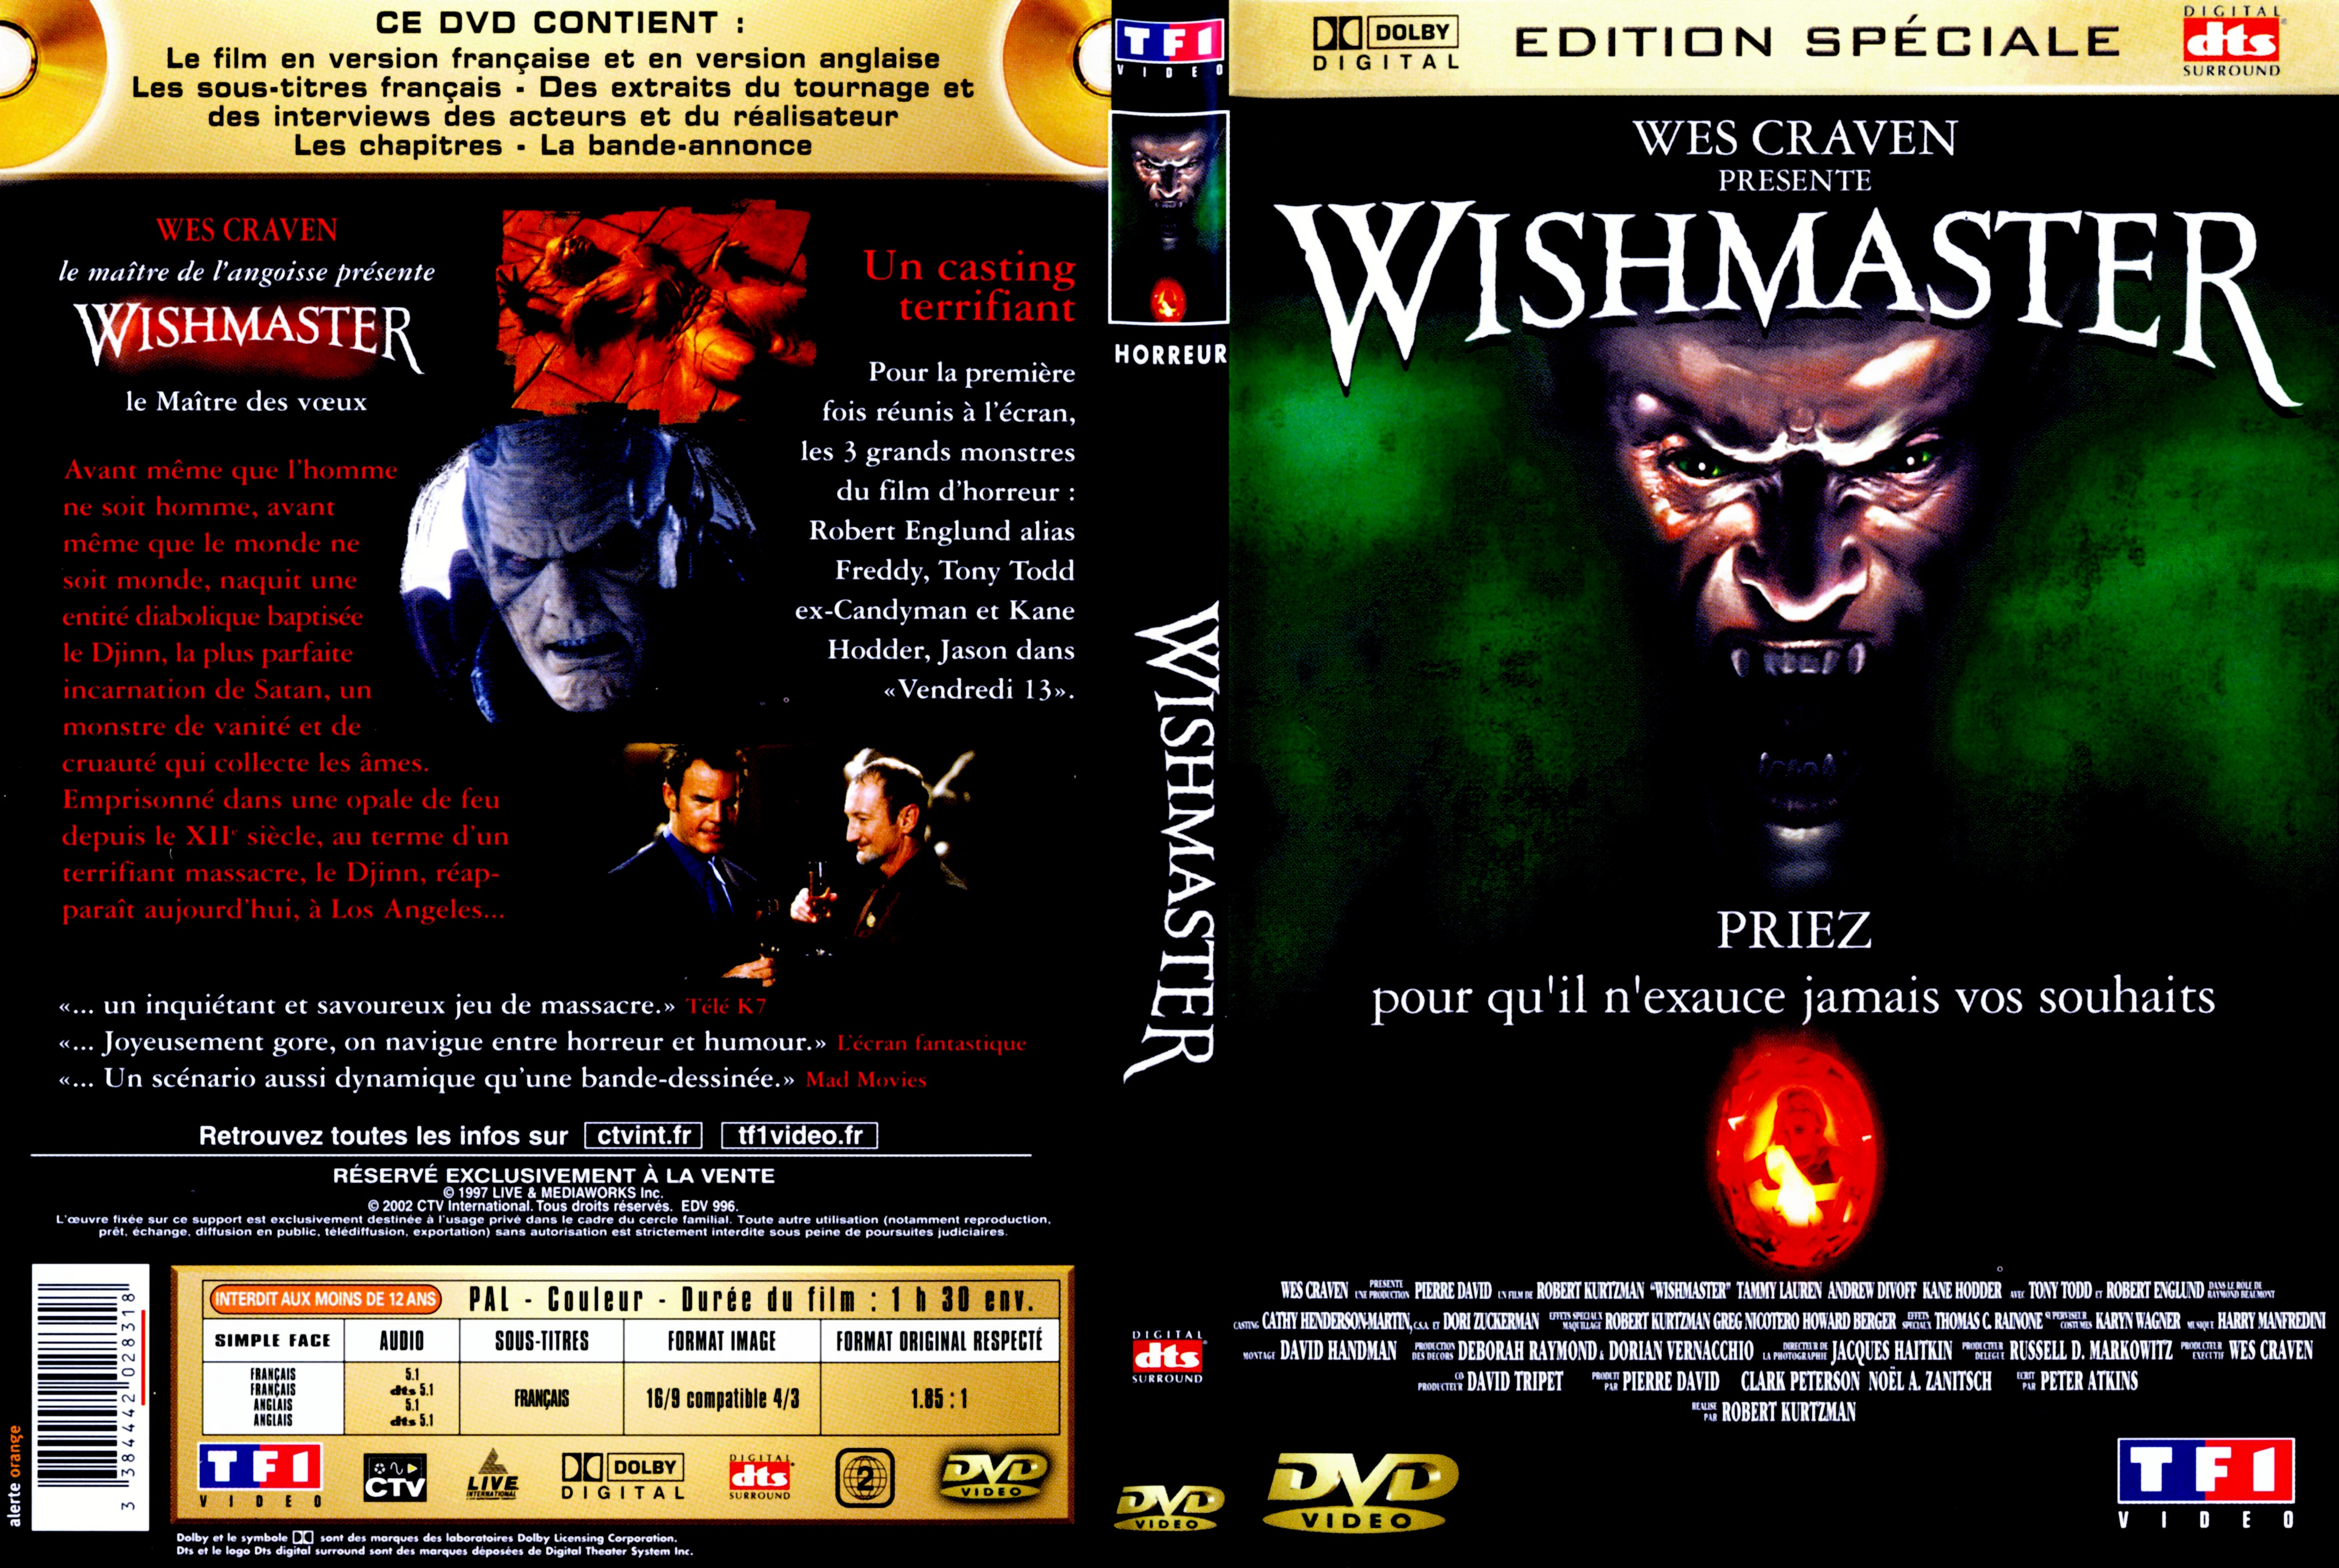 Jaquette DVD Wishmaster v2